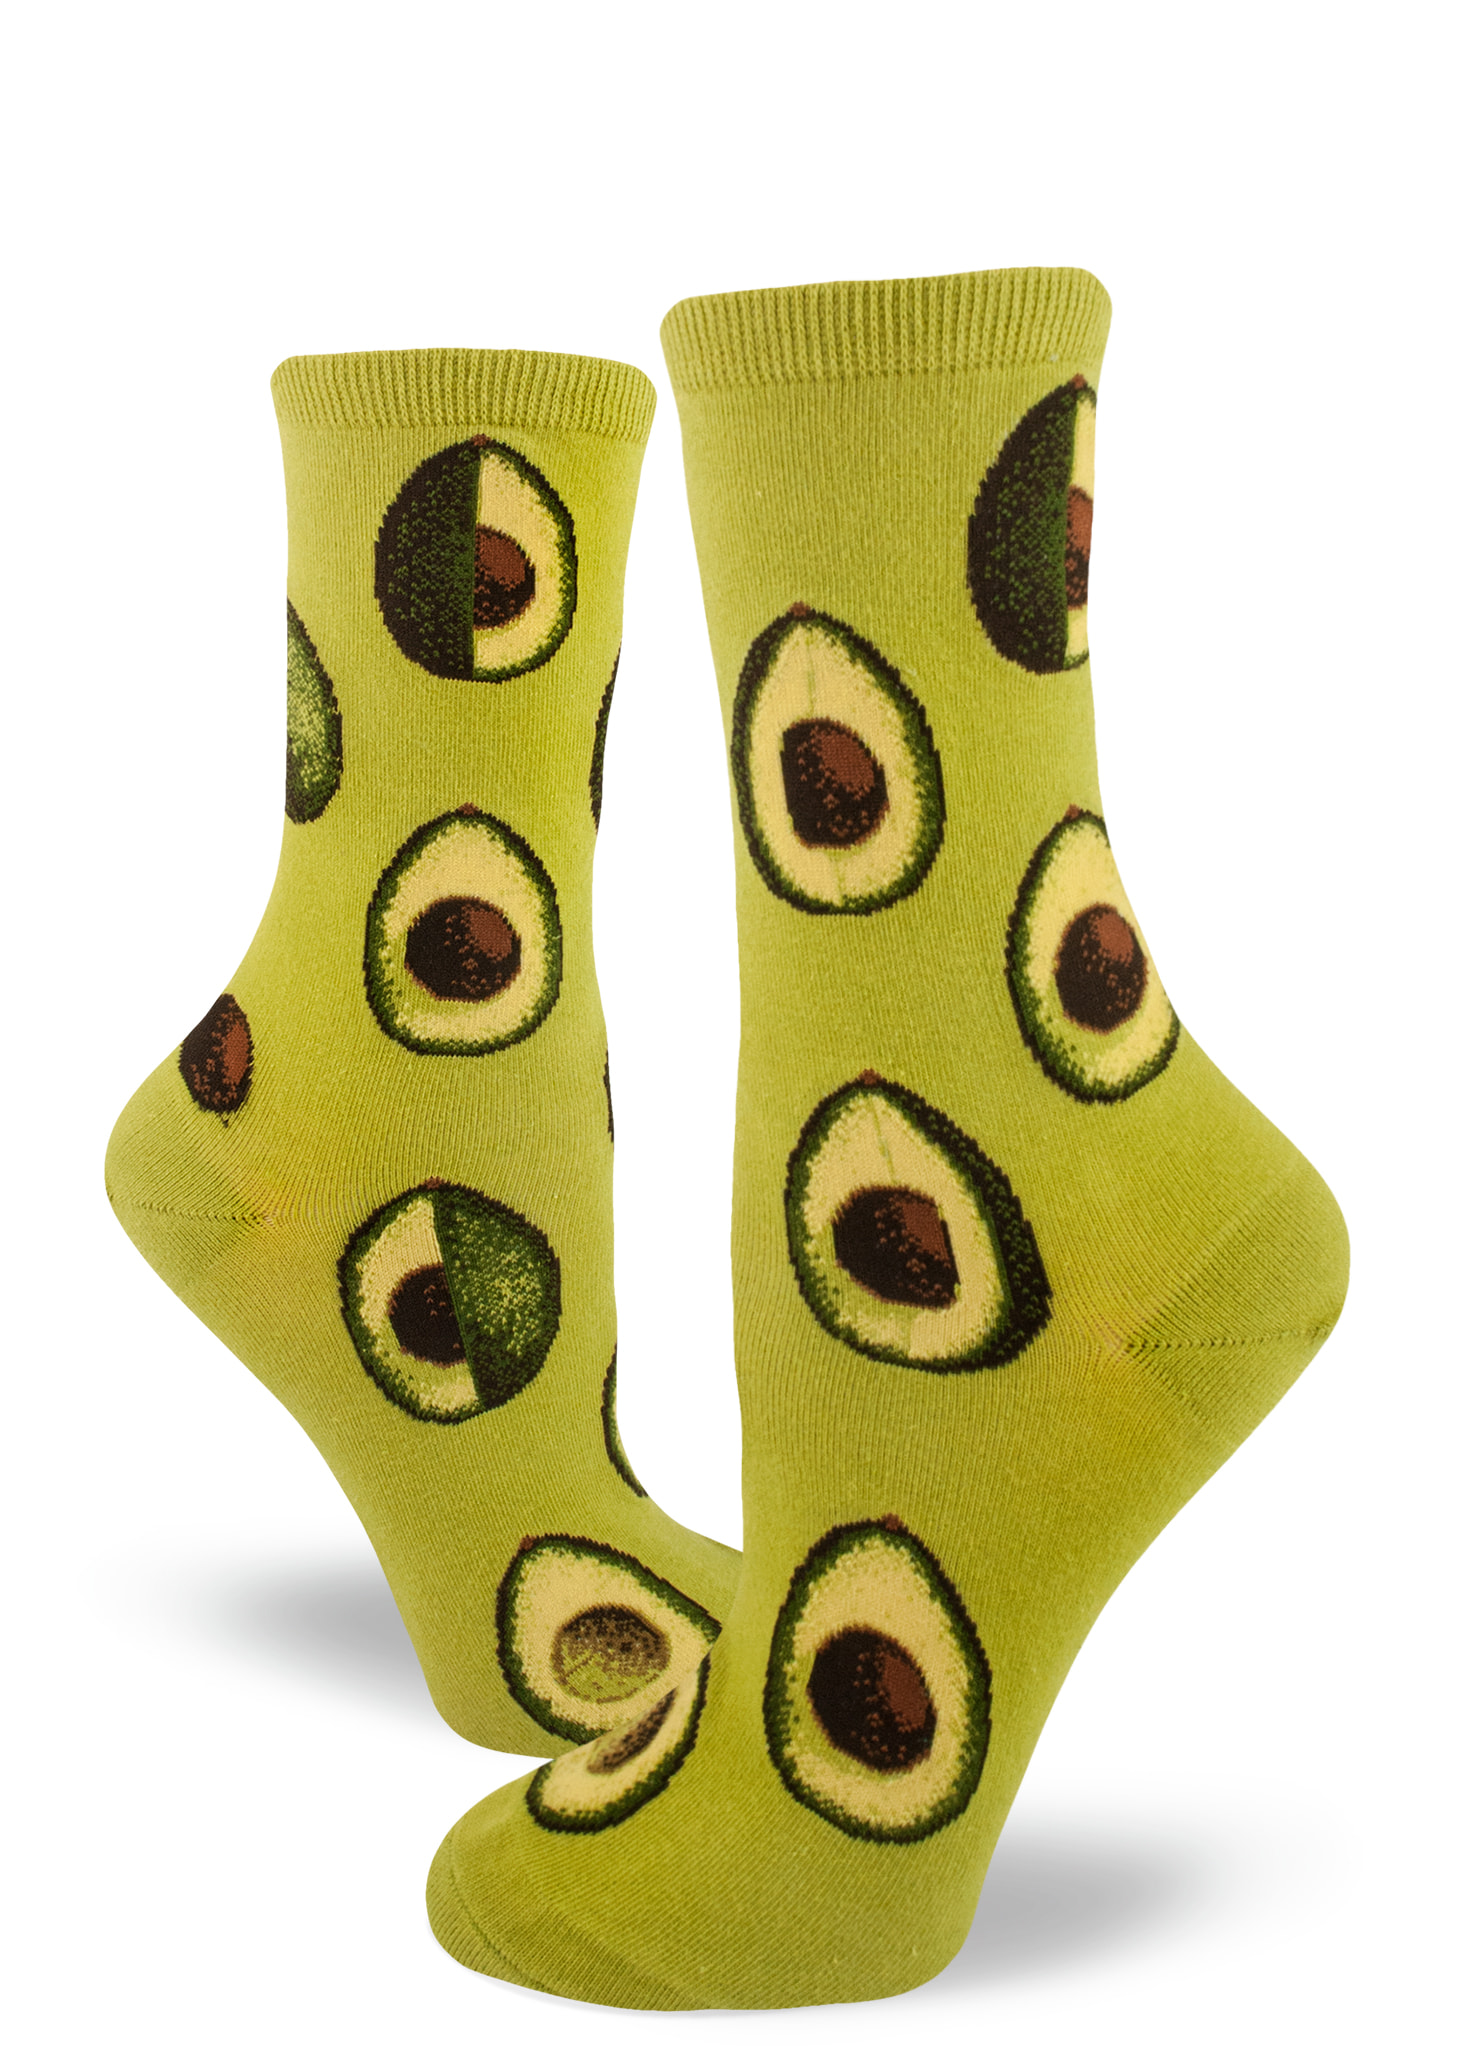 Avocado Phase Women's Crew Socks – Wasabi - ModSocks